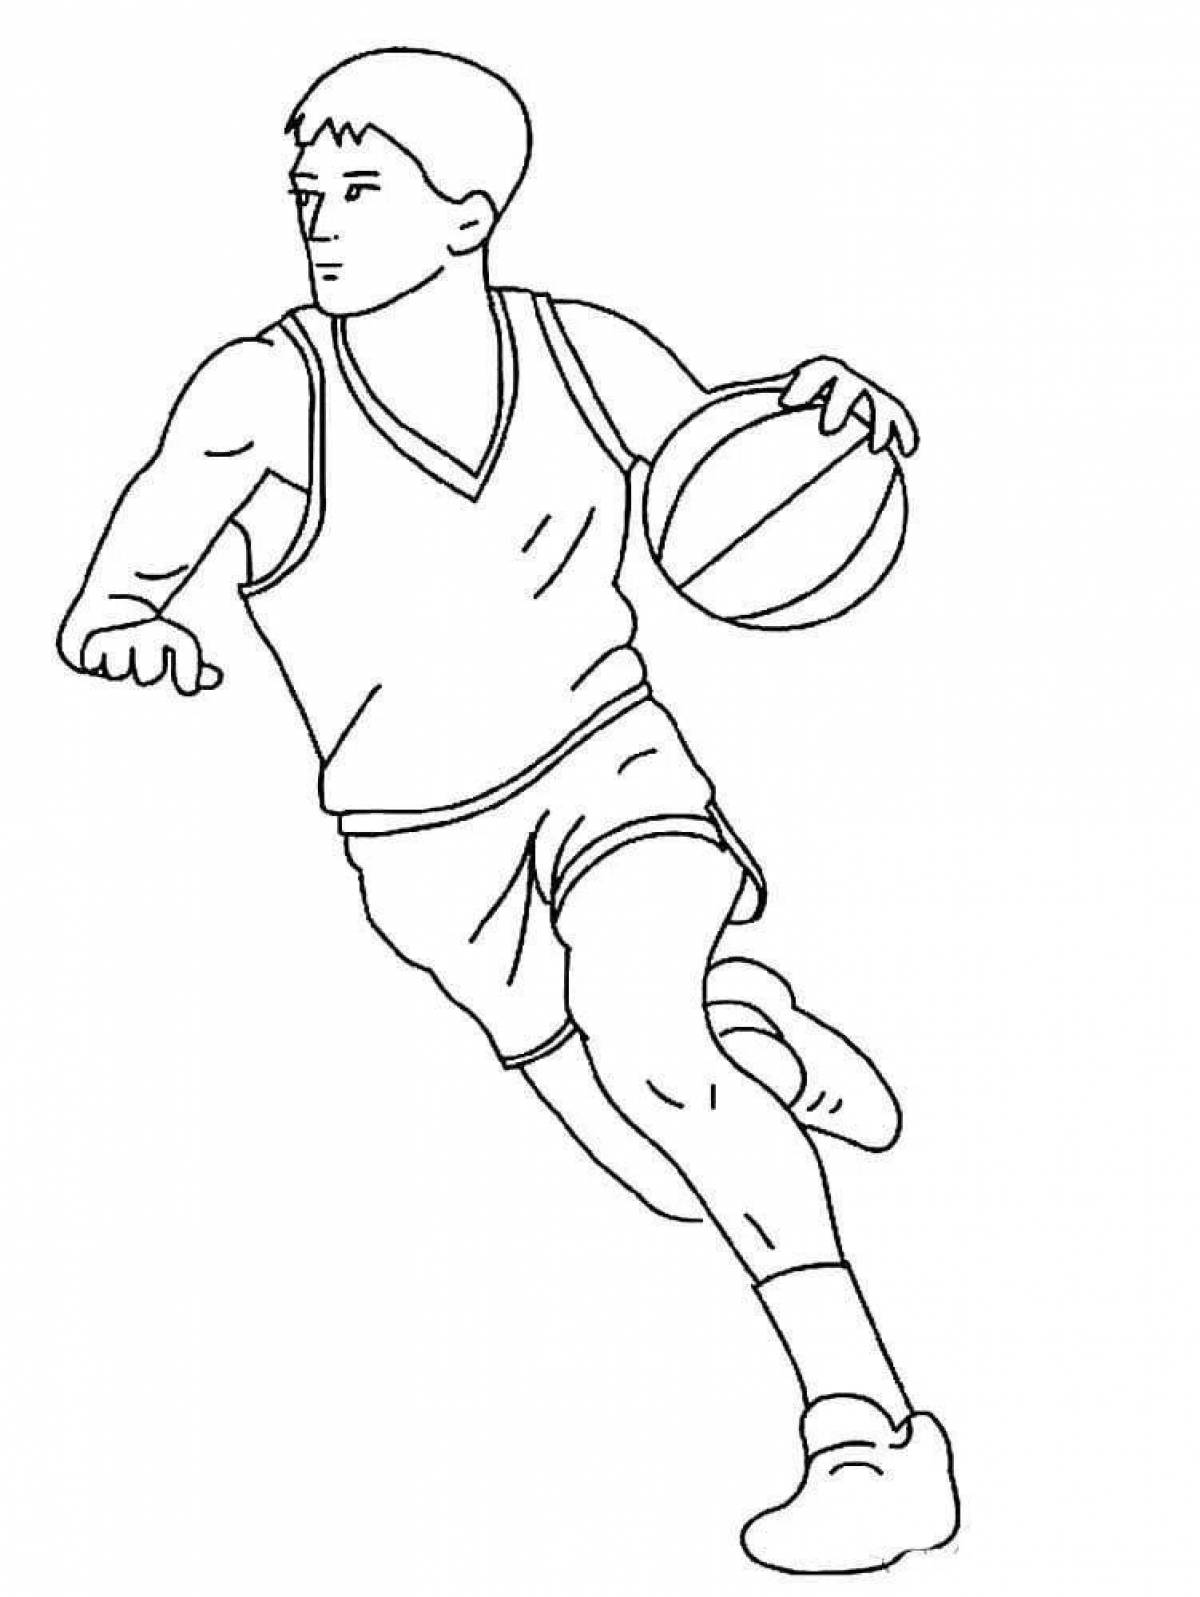 Спортсмен в движении рисунок. Раскраска баскетбол. Спортсмен рисунок. Баскетбольные картинки раскраски. Спорт рисунок карандашом.